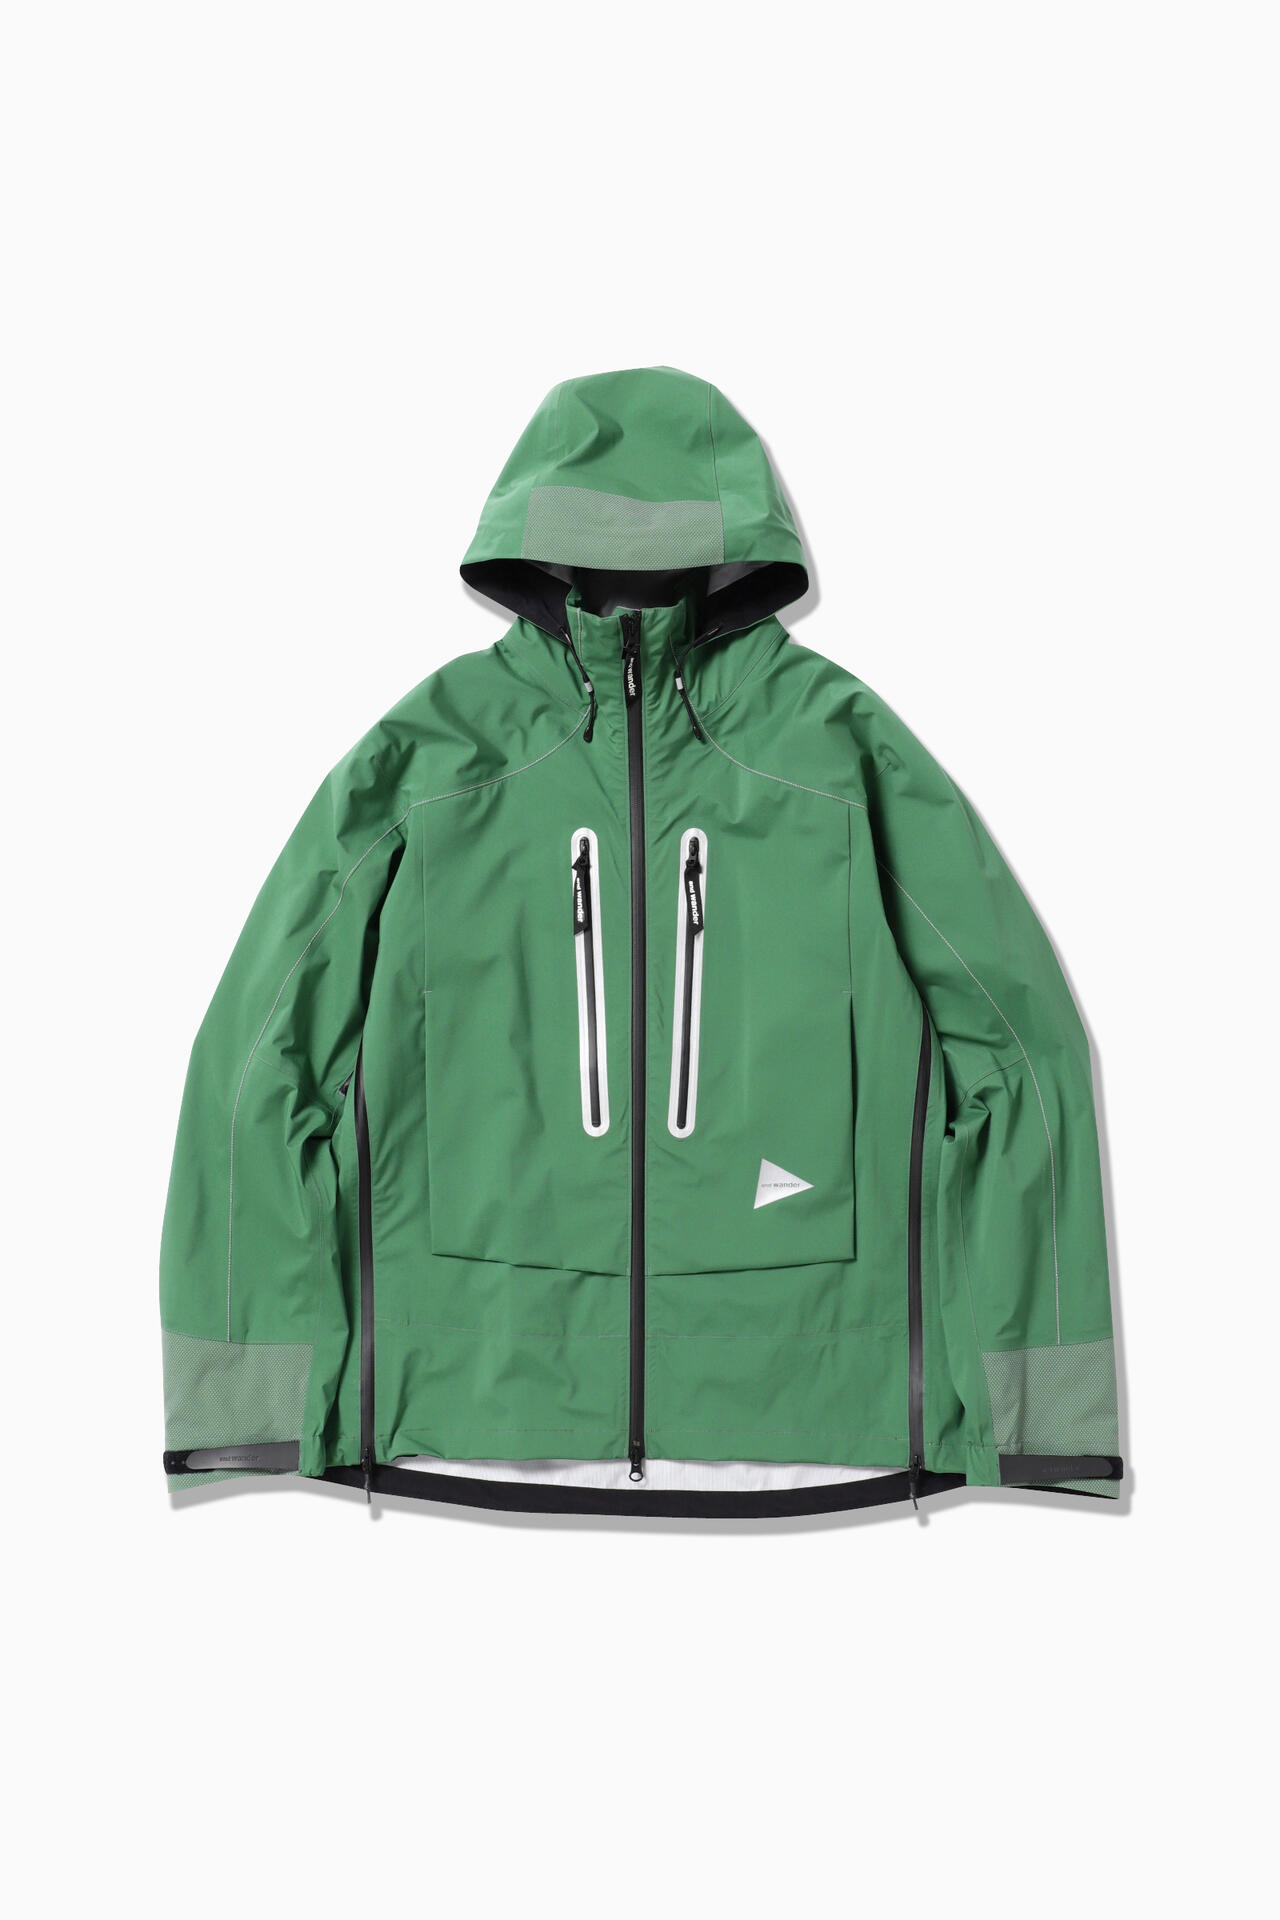 And Wander PERTEX SHIELD rain jacket　XL35000円はOKです